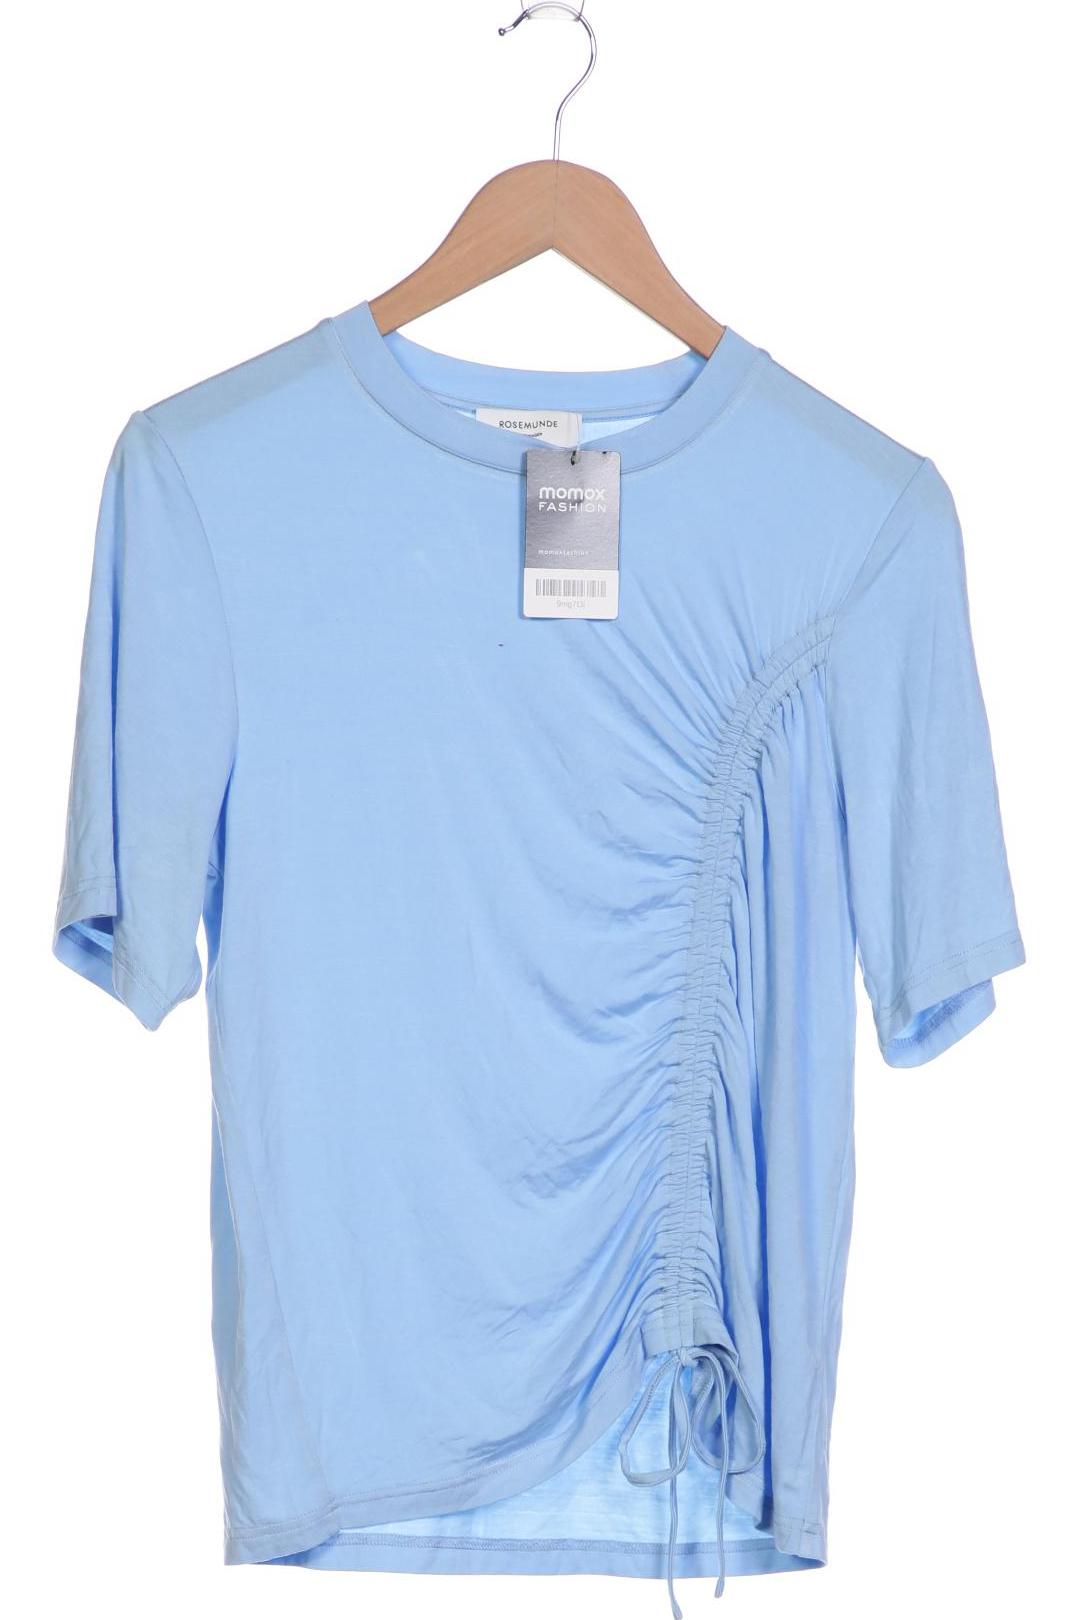 Rosemunde Damen T-Shirt, hellblau von Rosemunde